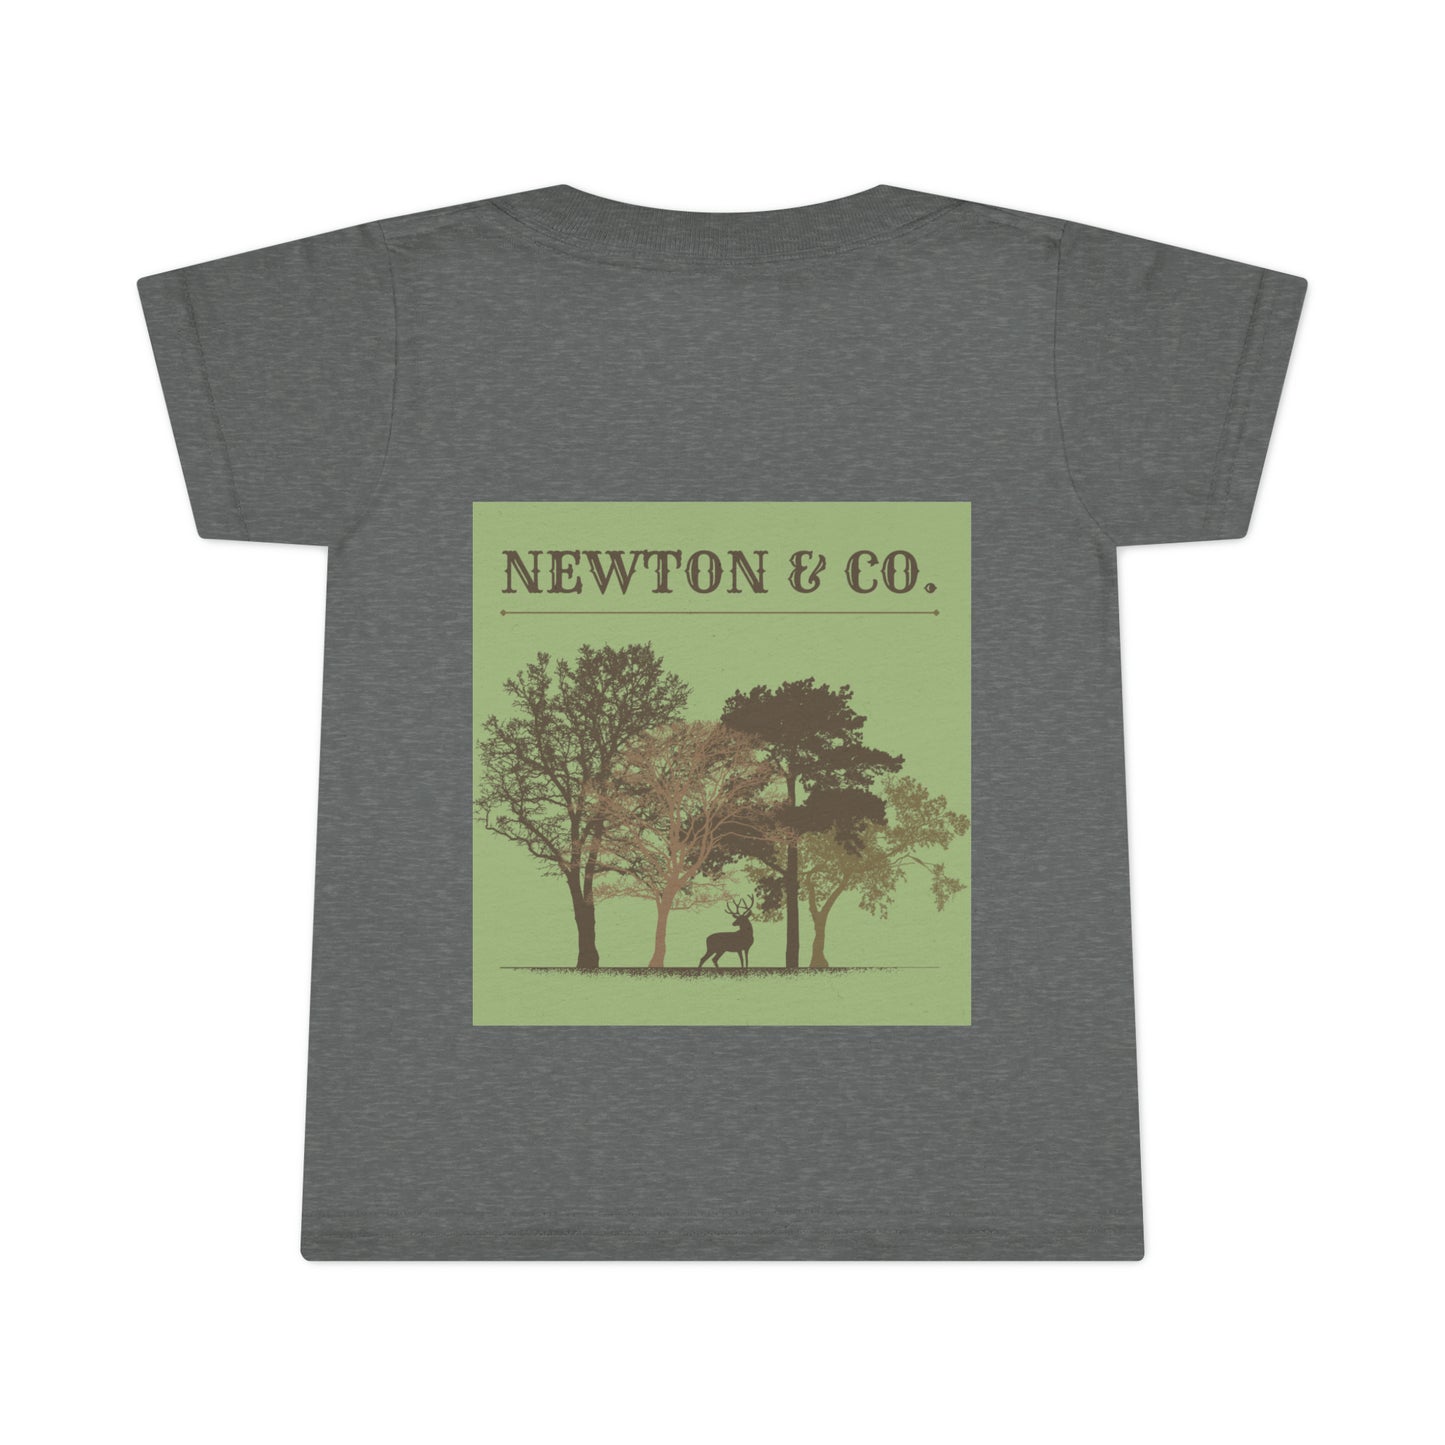 Newton & Co. Toddler T-shirt